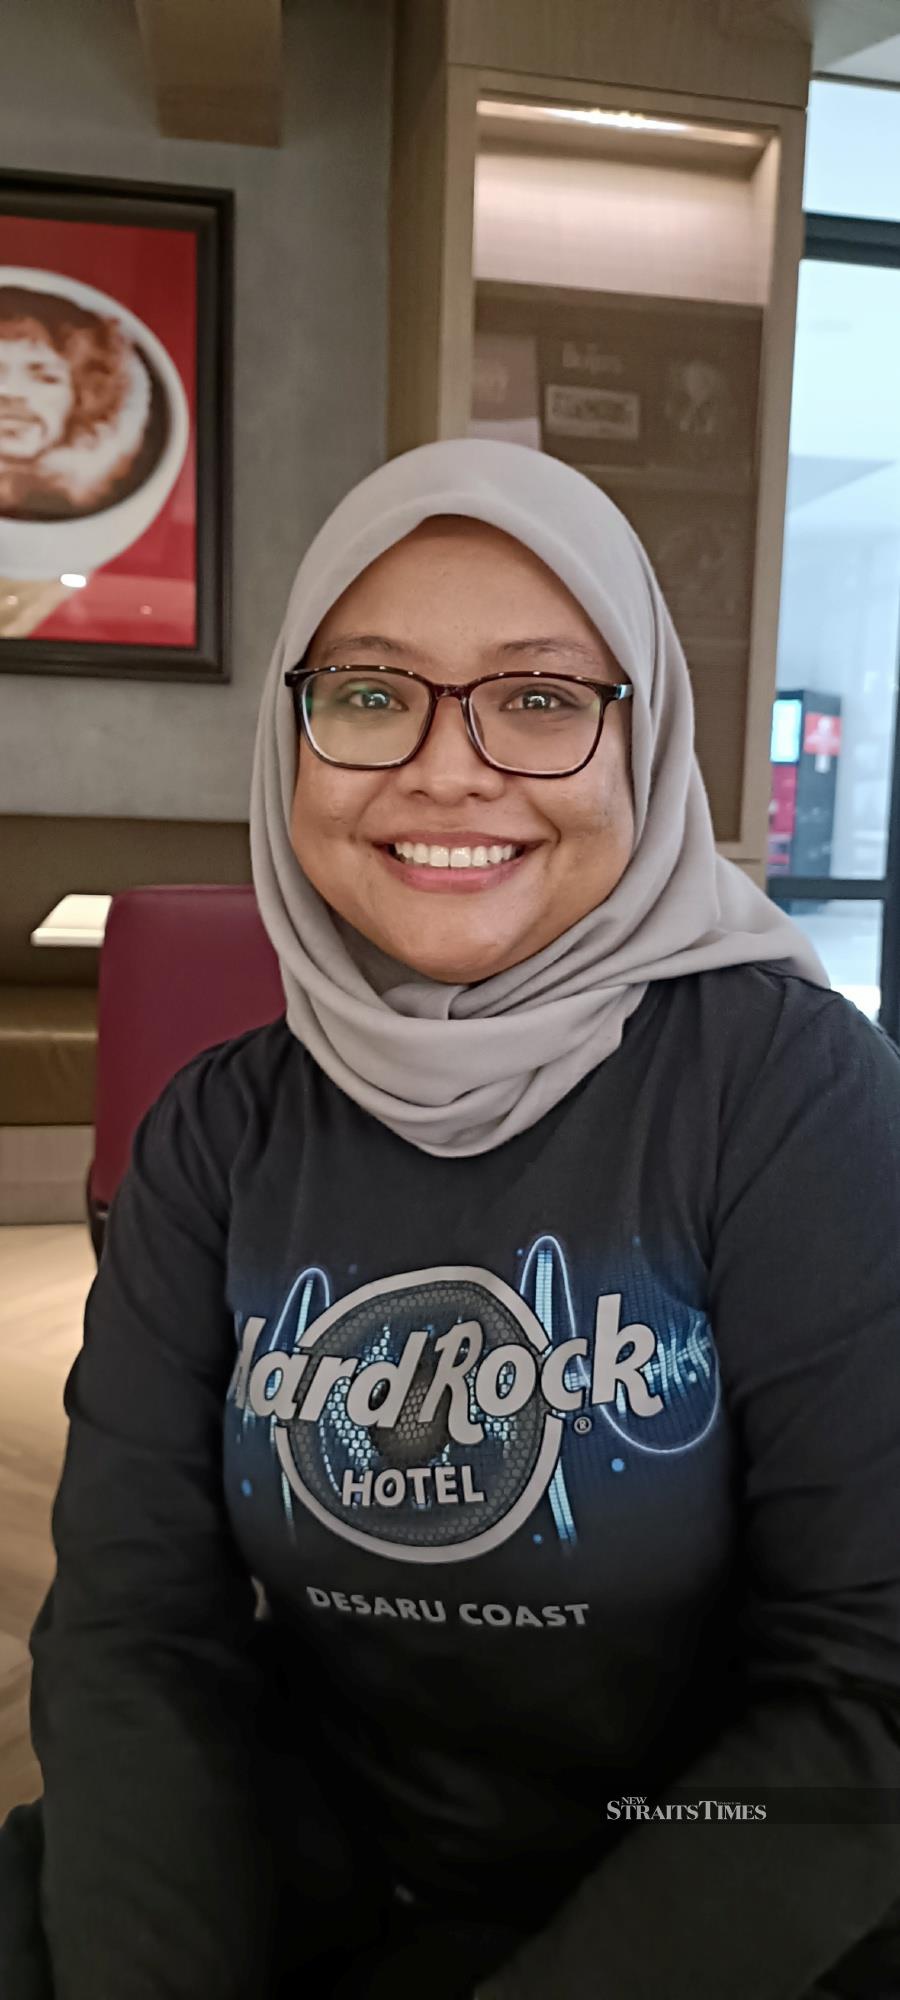  Siti Norazliyana Ali, or simply Yana, is Hard Rock Hotel Desaru Coast's sustainability manager.